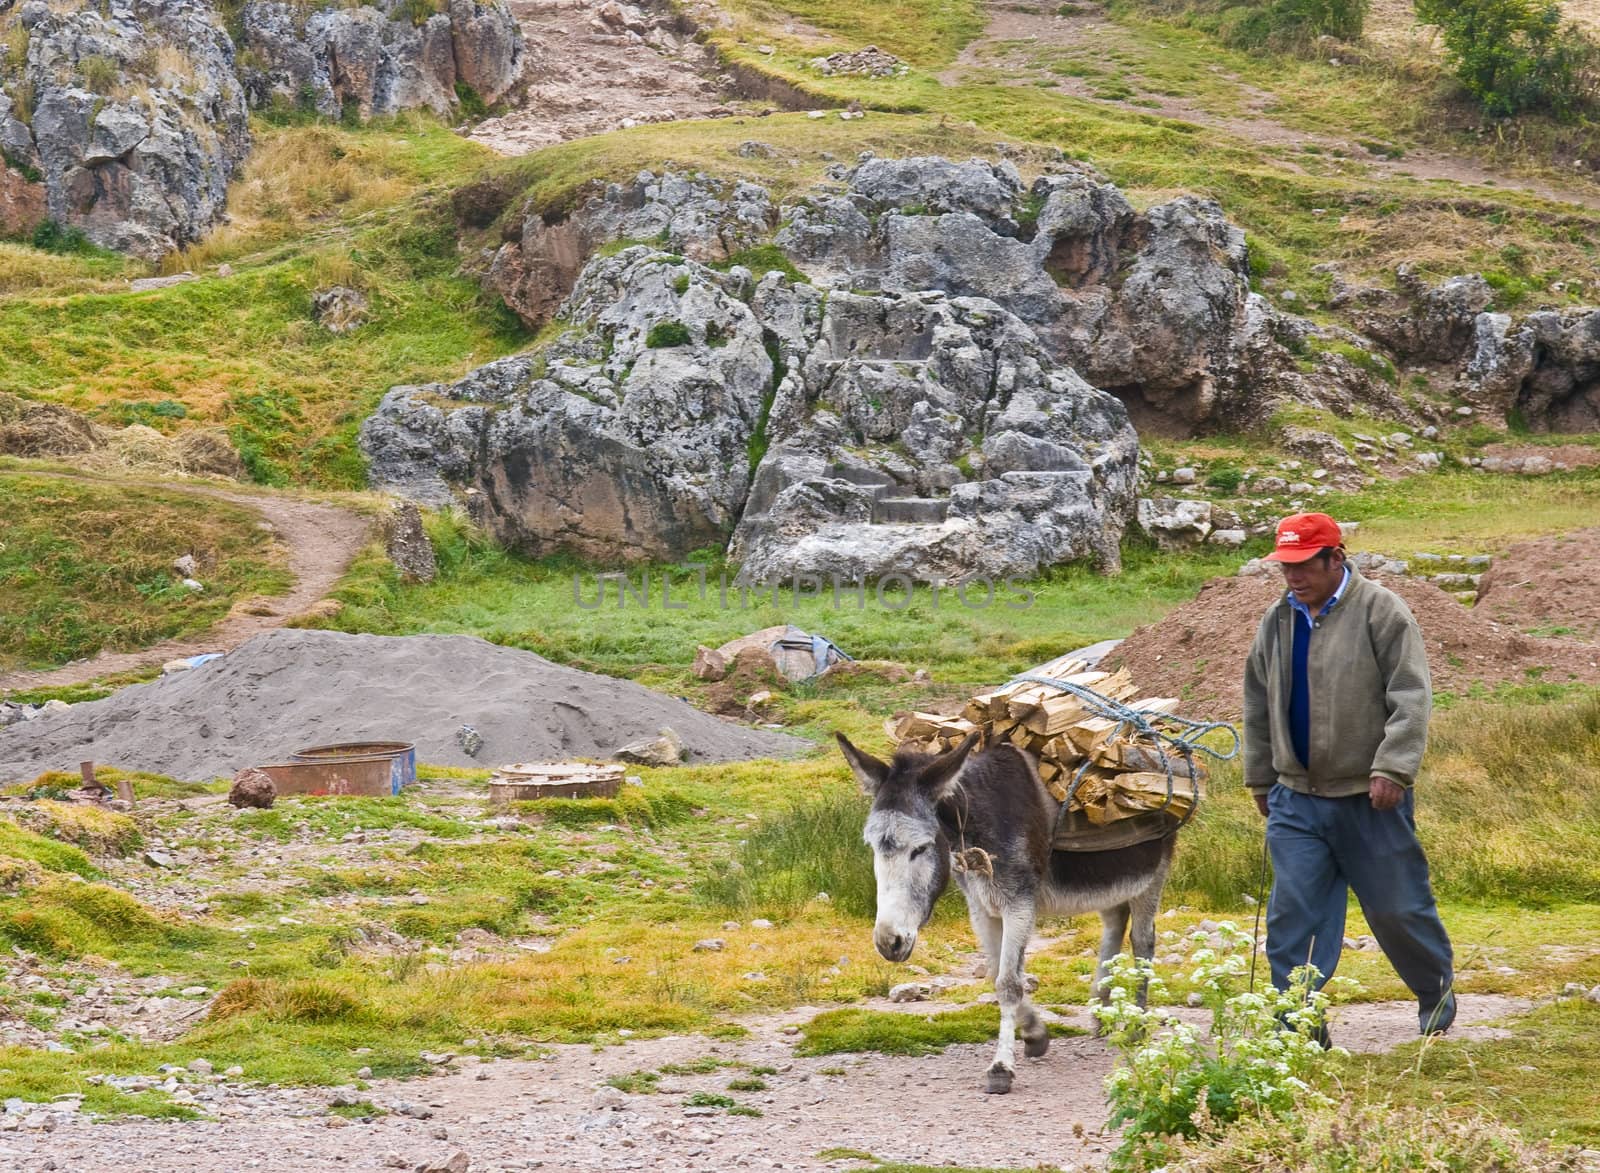 Donkey in Peru by kobby_dagan